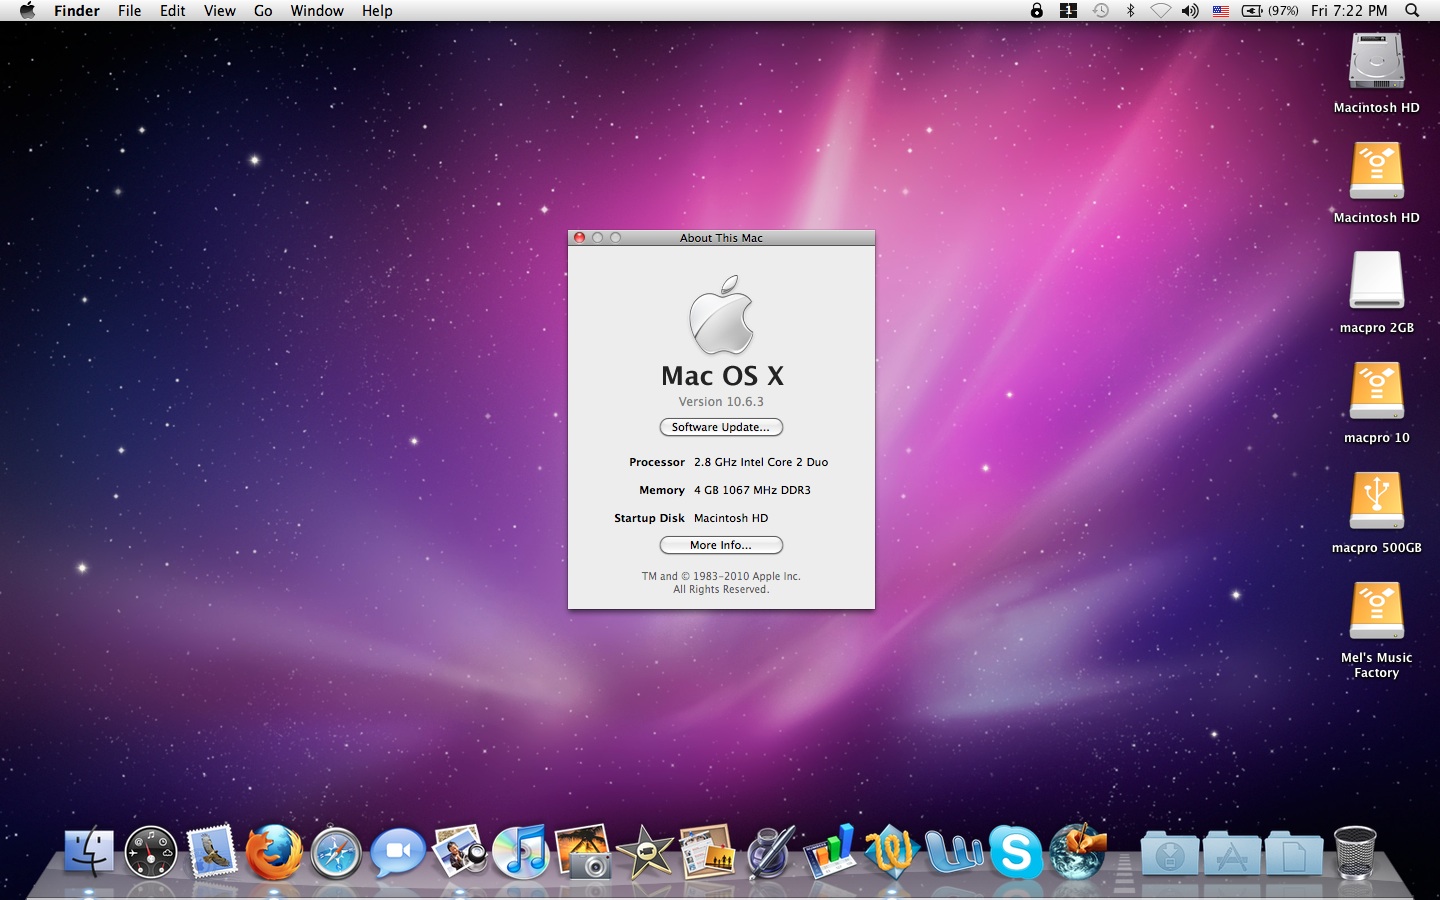 chrome version for mac 10.5.8